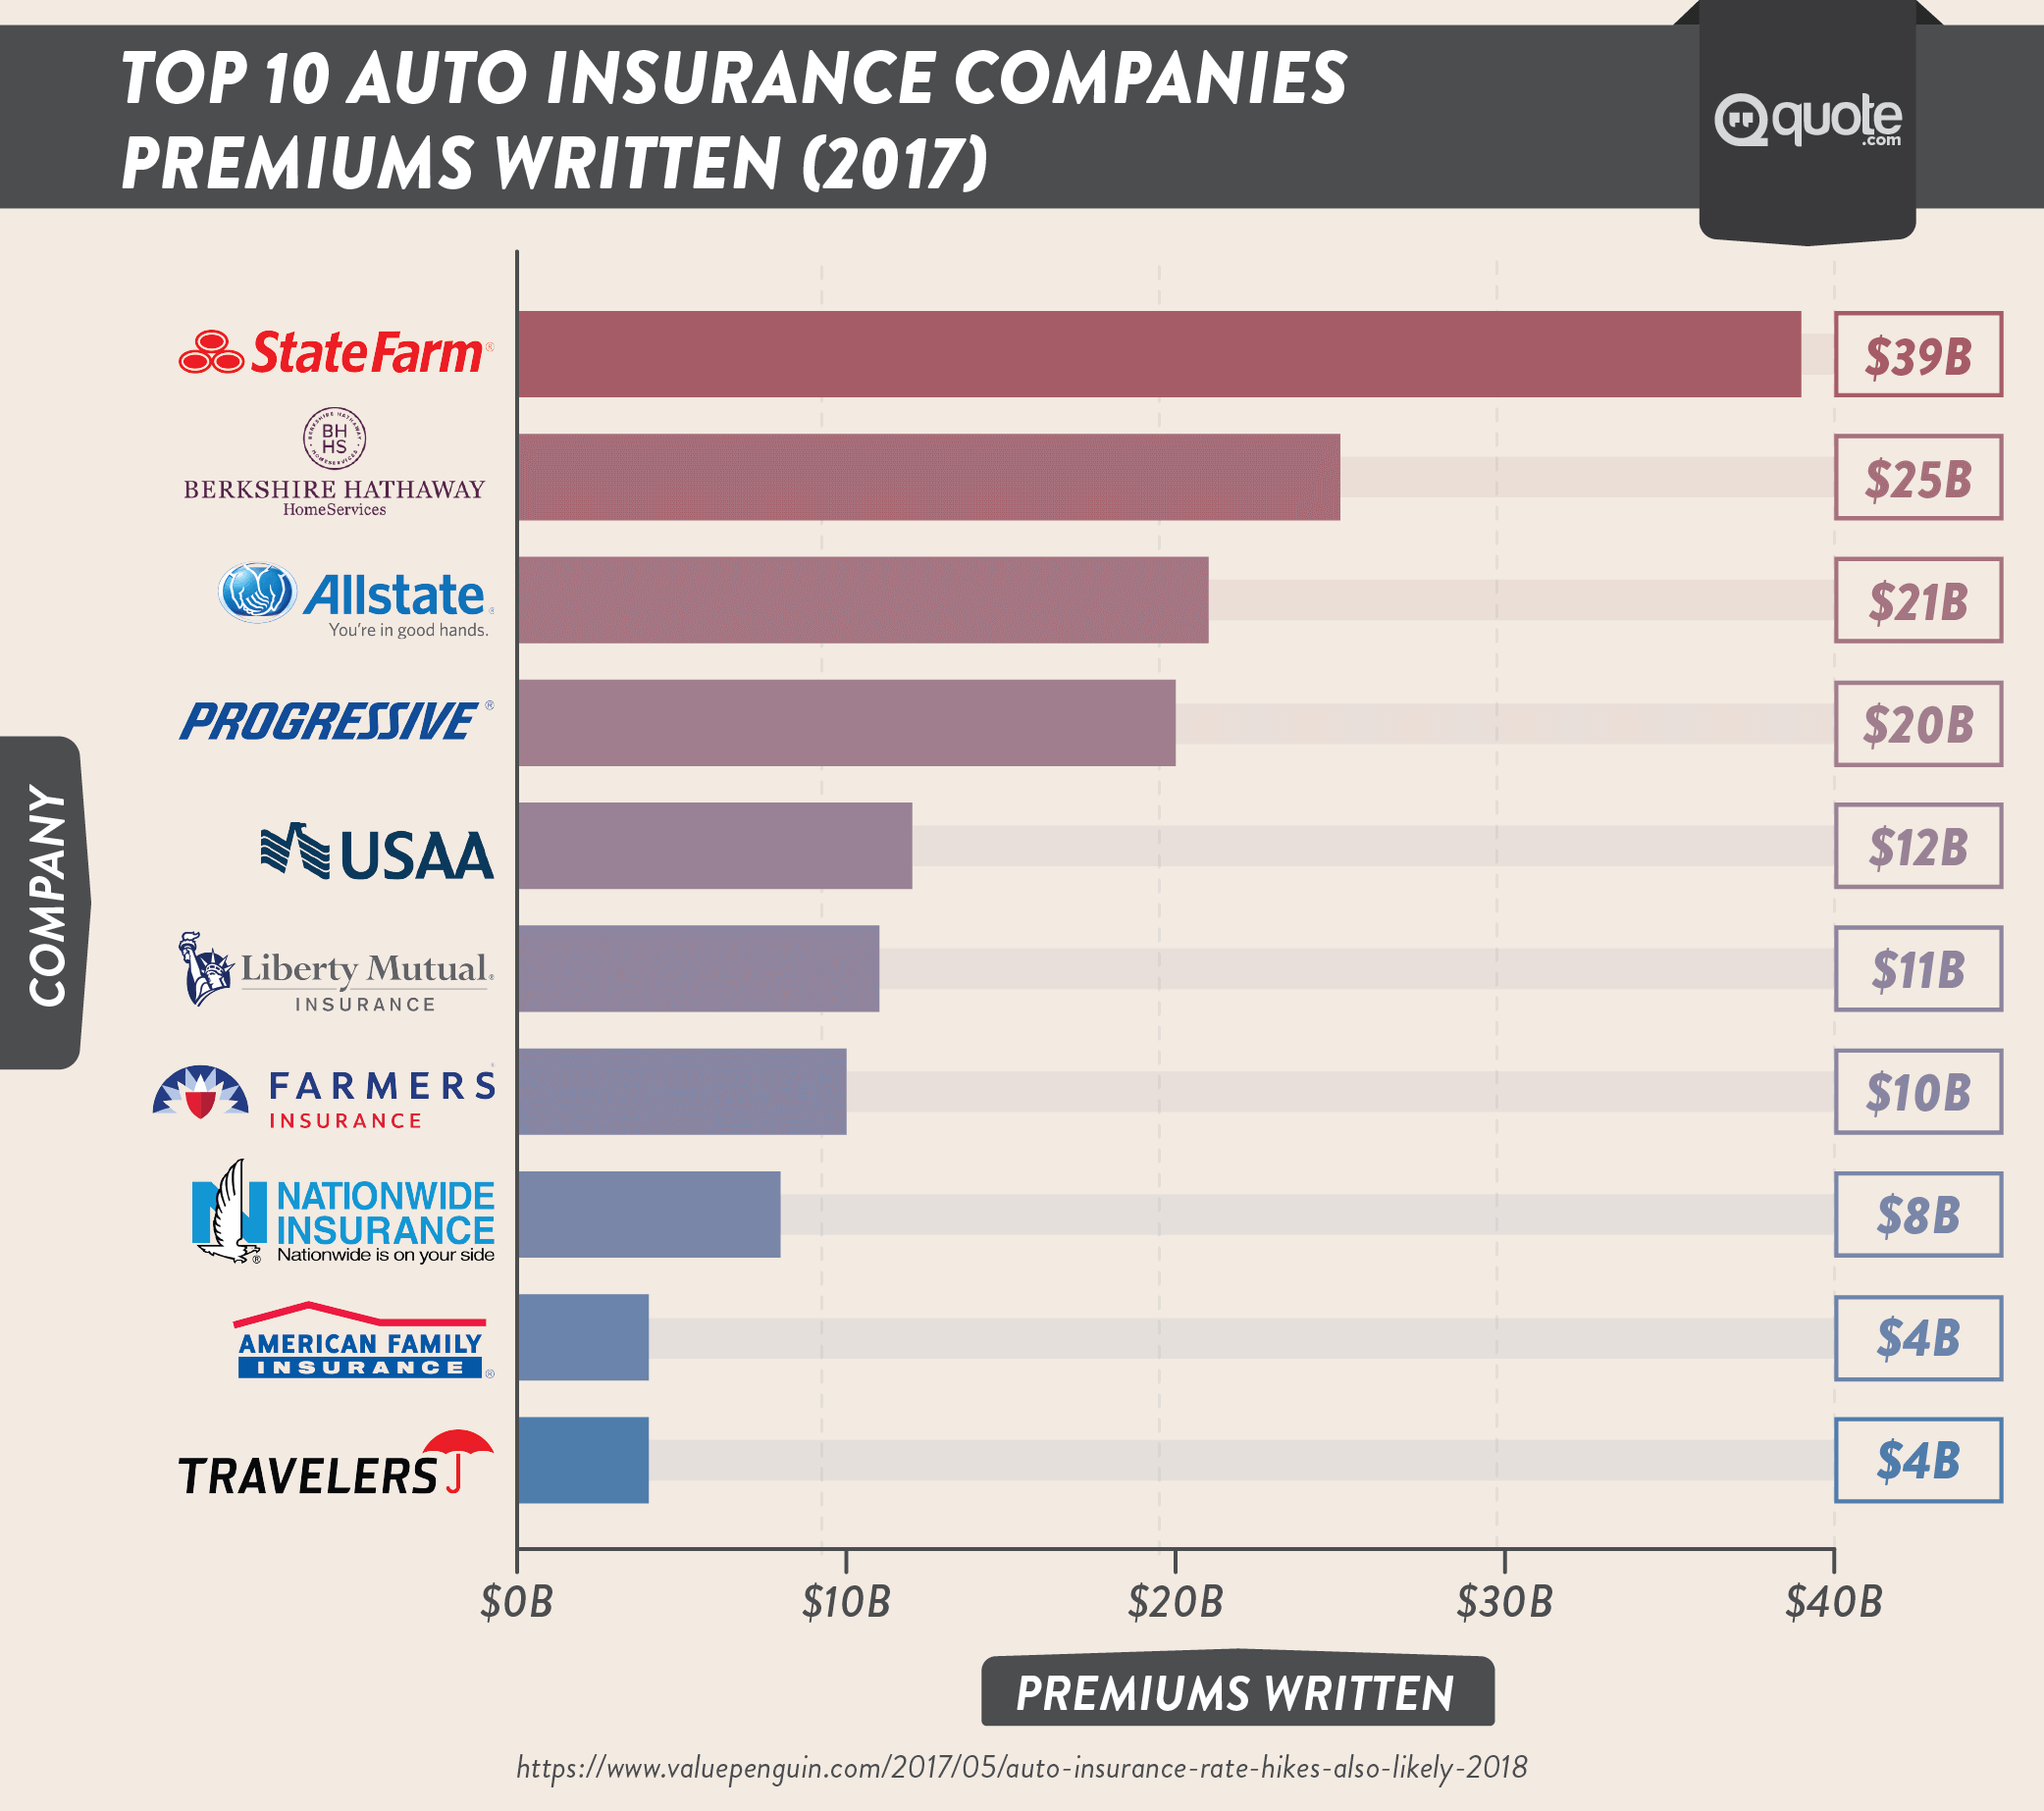 Top 10 Auto Insurance Companies - Premiums Written